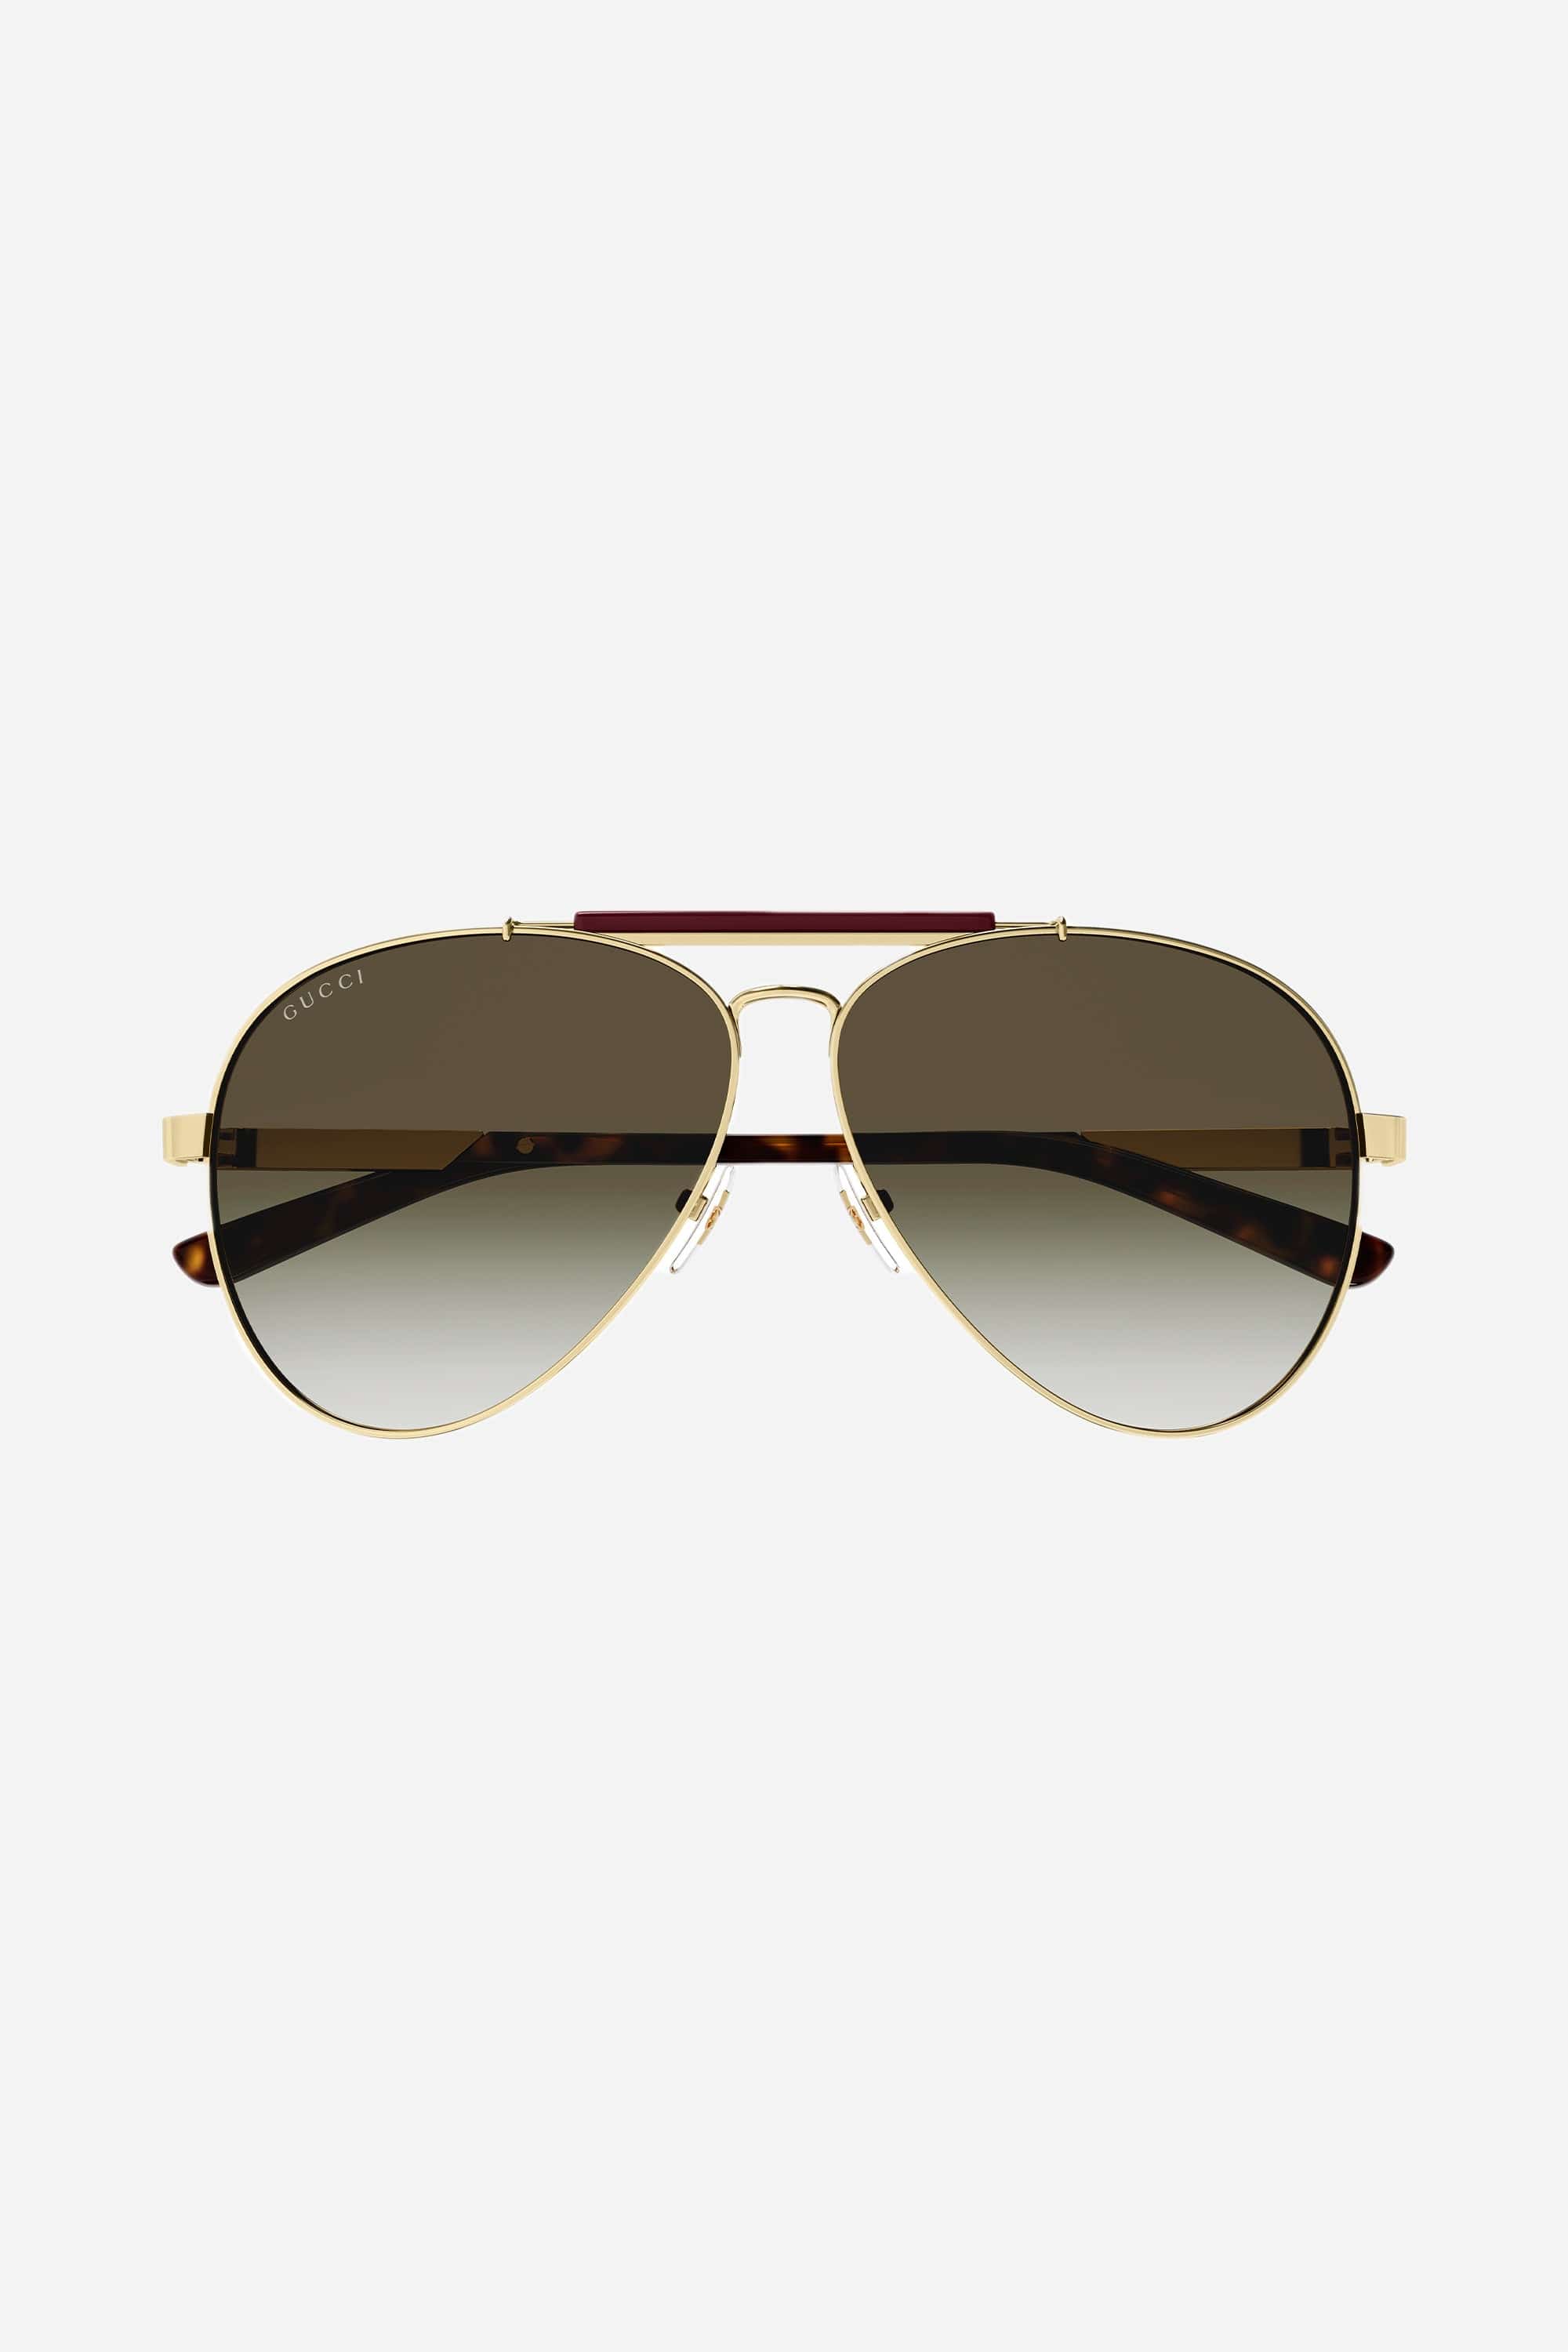 Gucci pilot brown sunglasses featuring double bridge - Eyewear Club